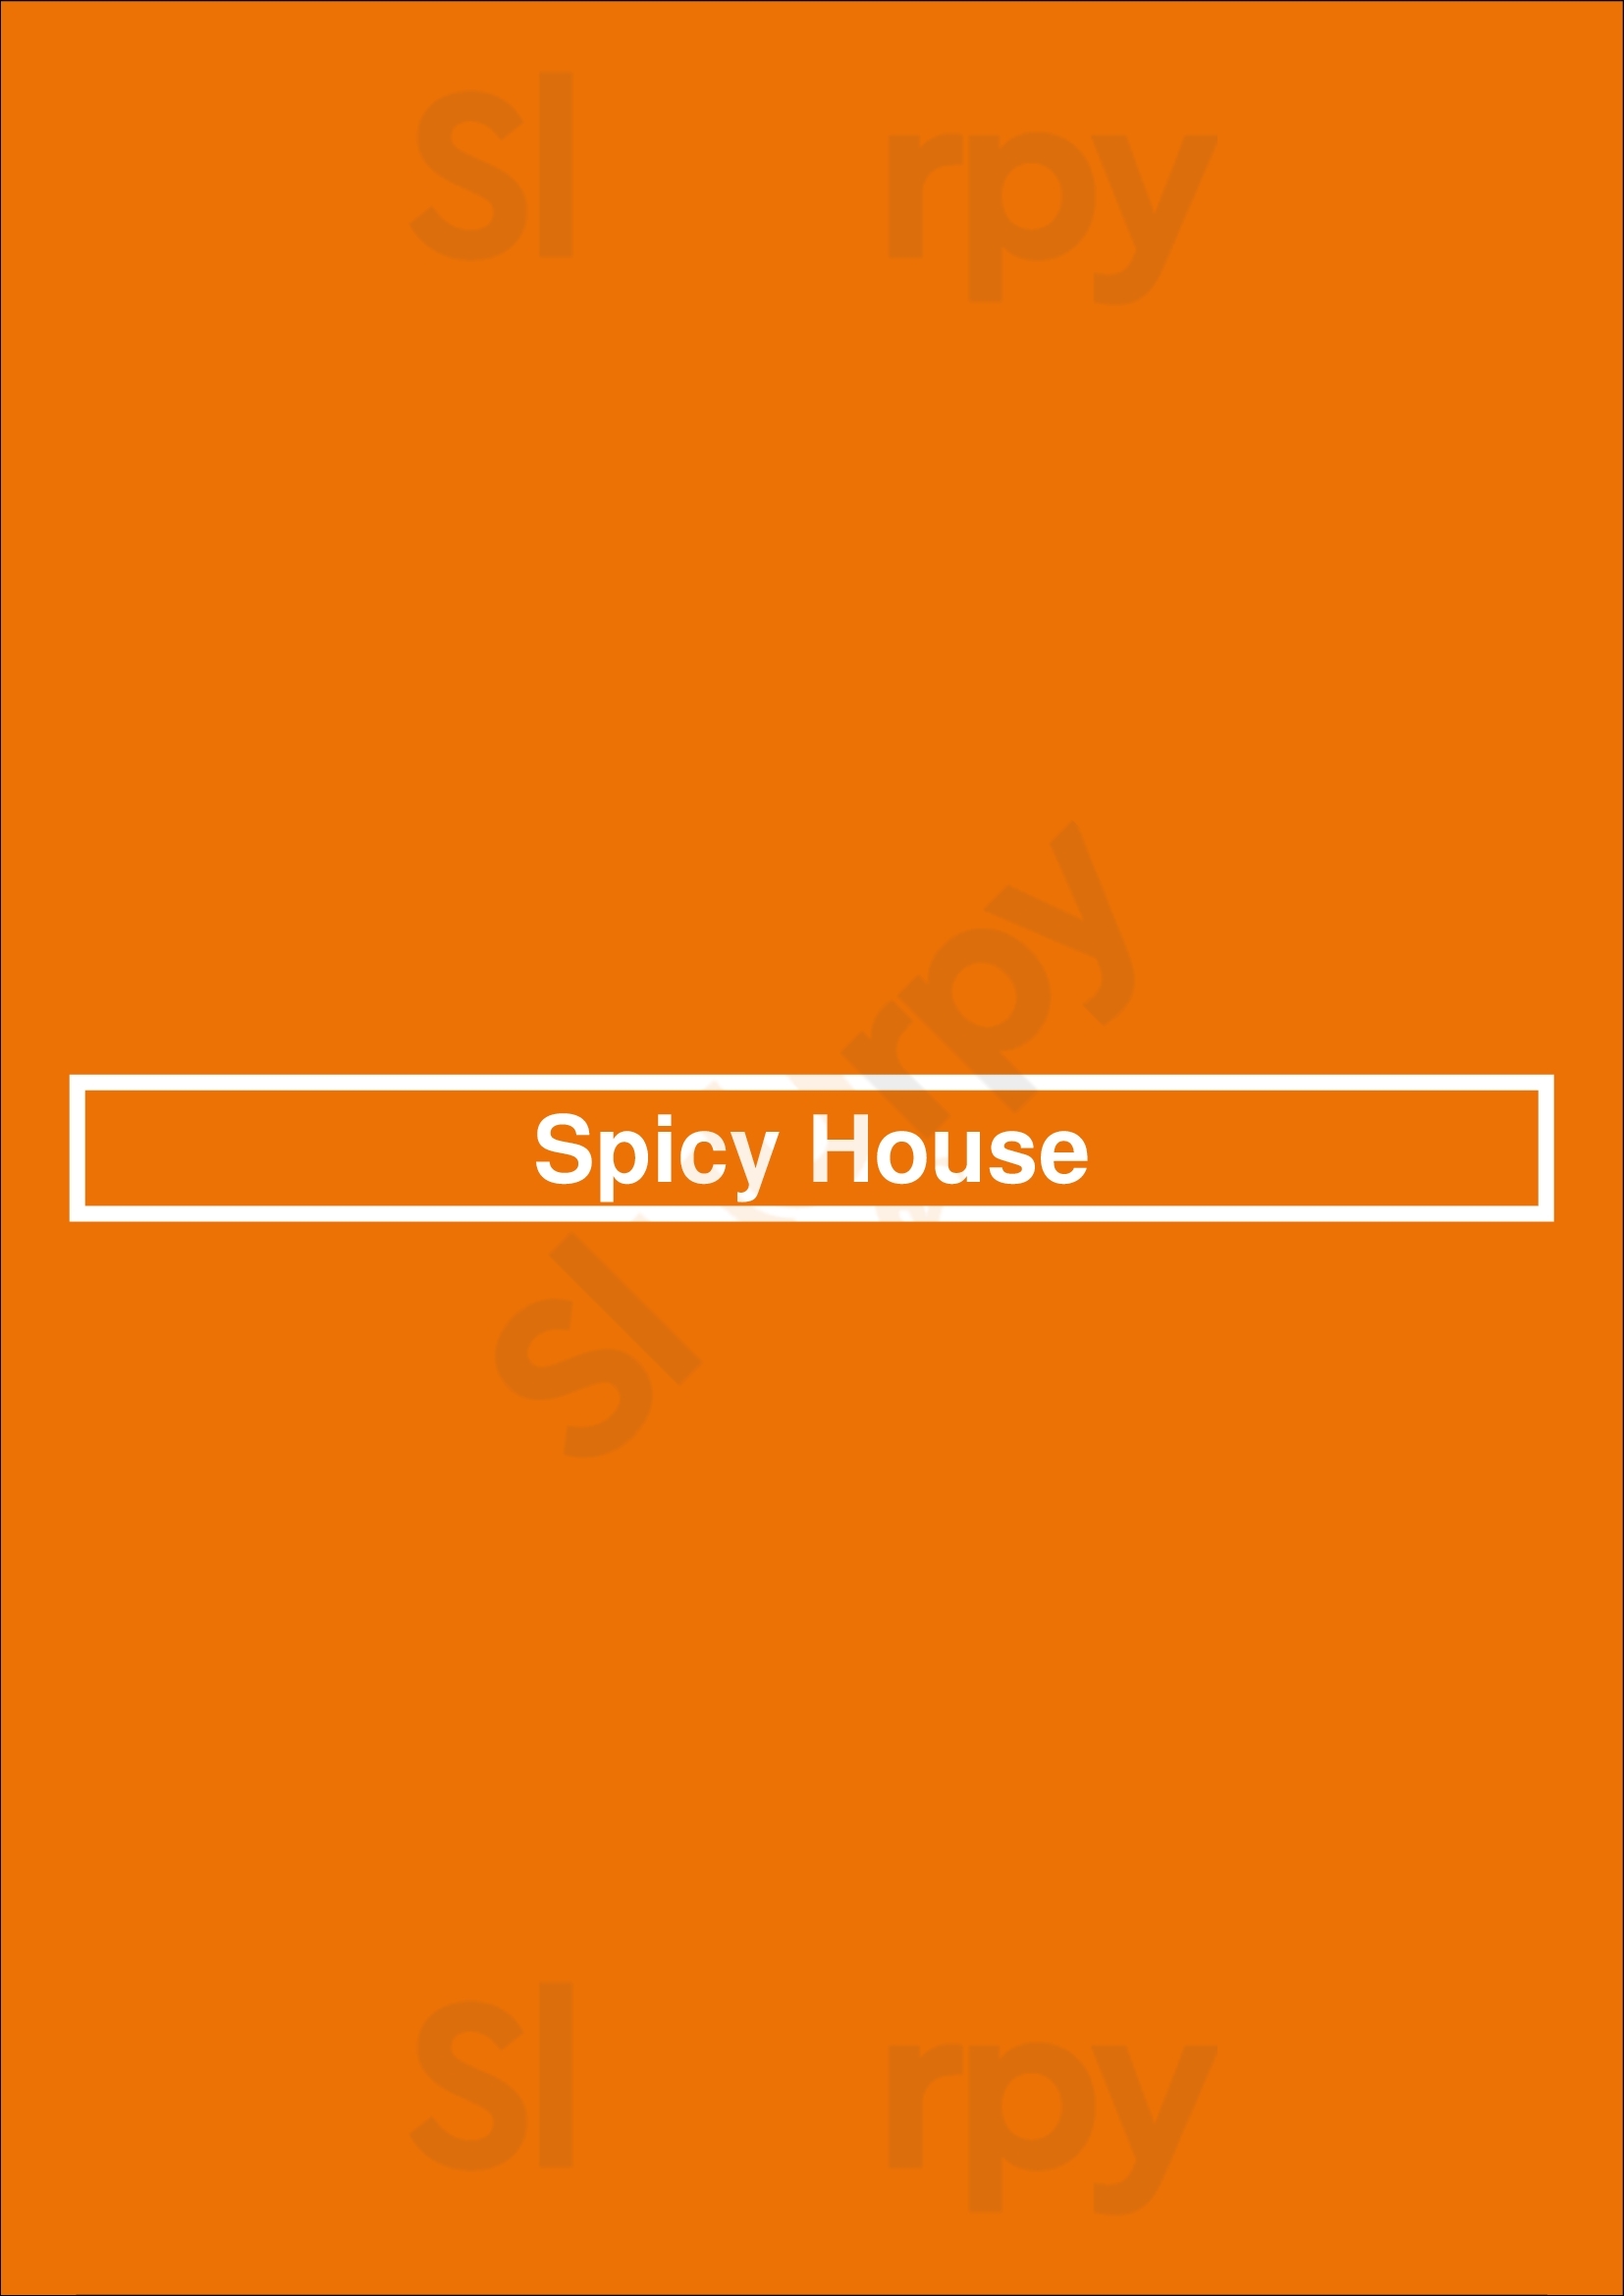 Spicy House Saint-Josse-ten-Noode Menu - 1